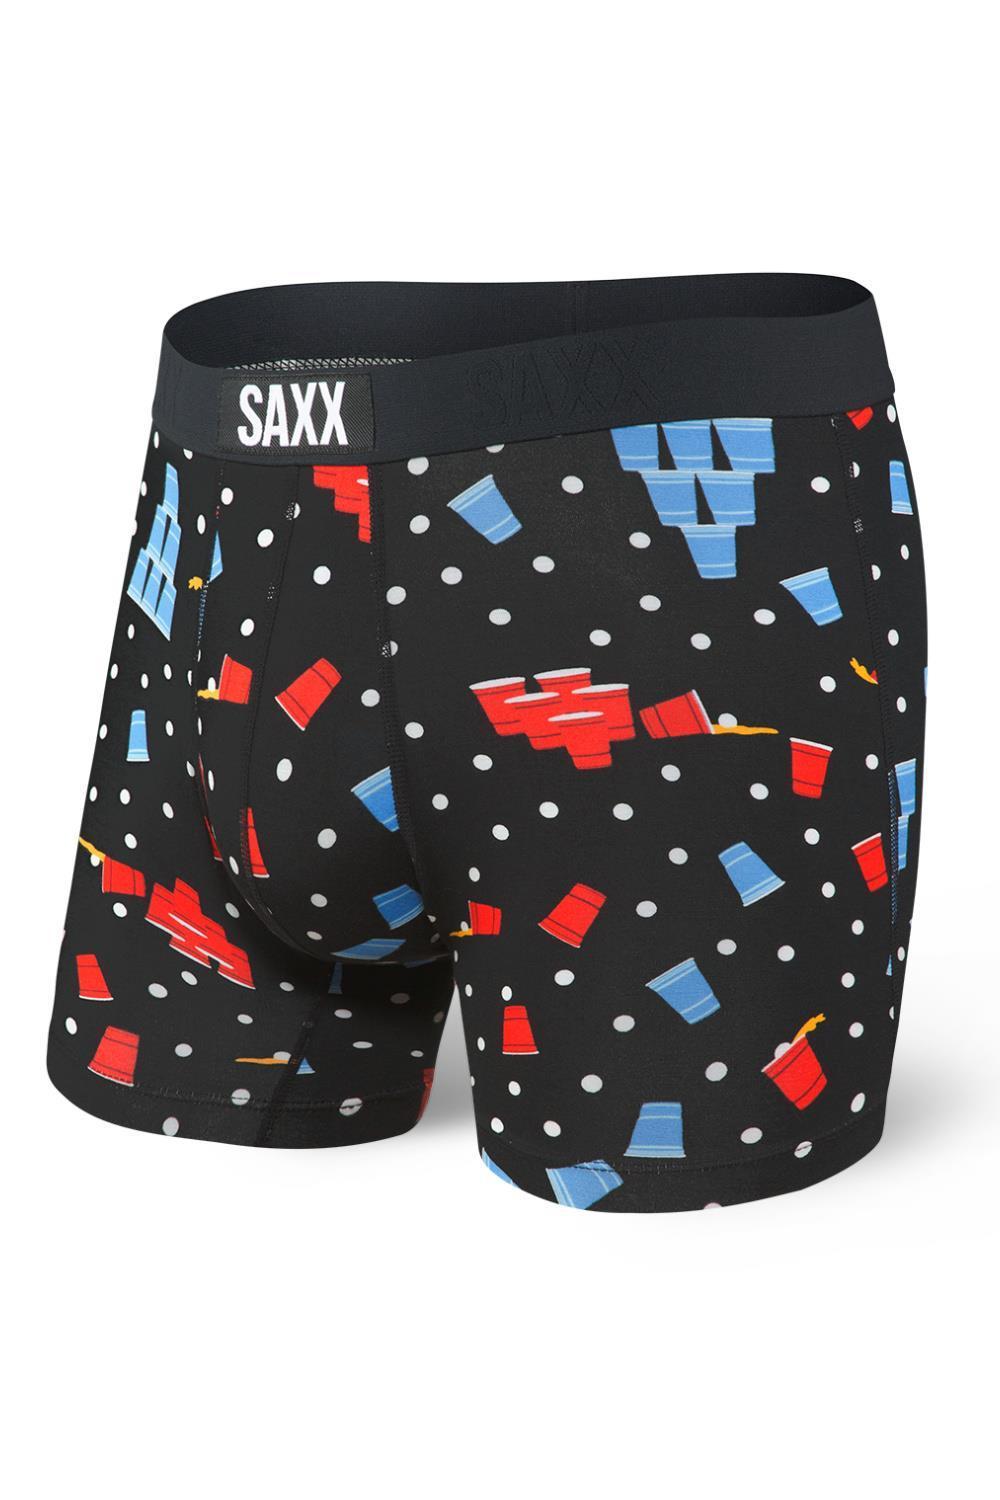 Saxx Underwear Vibe Slim Black